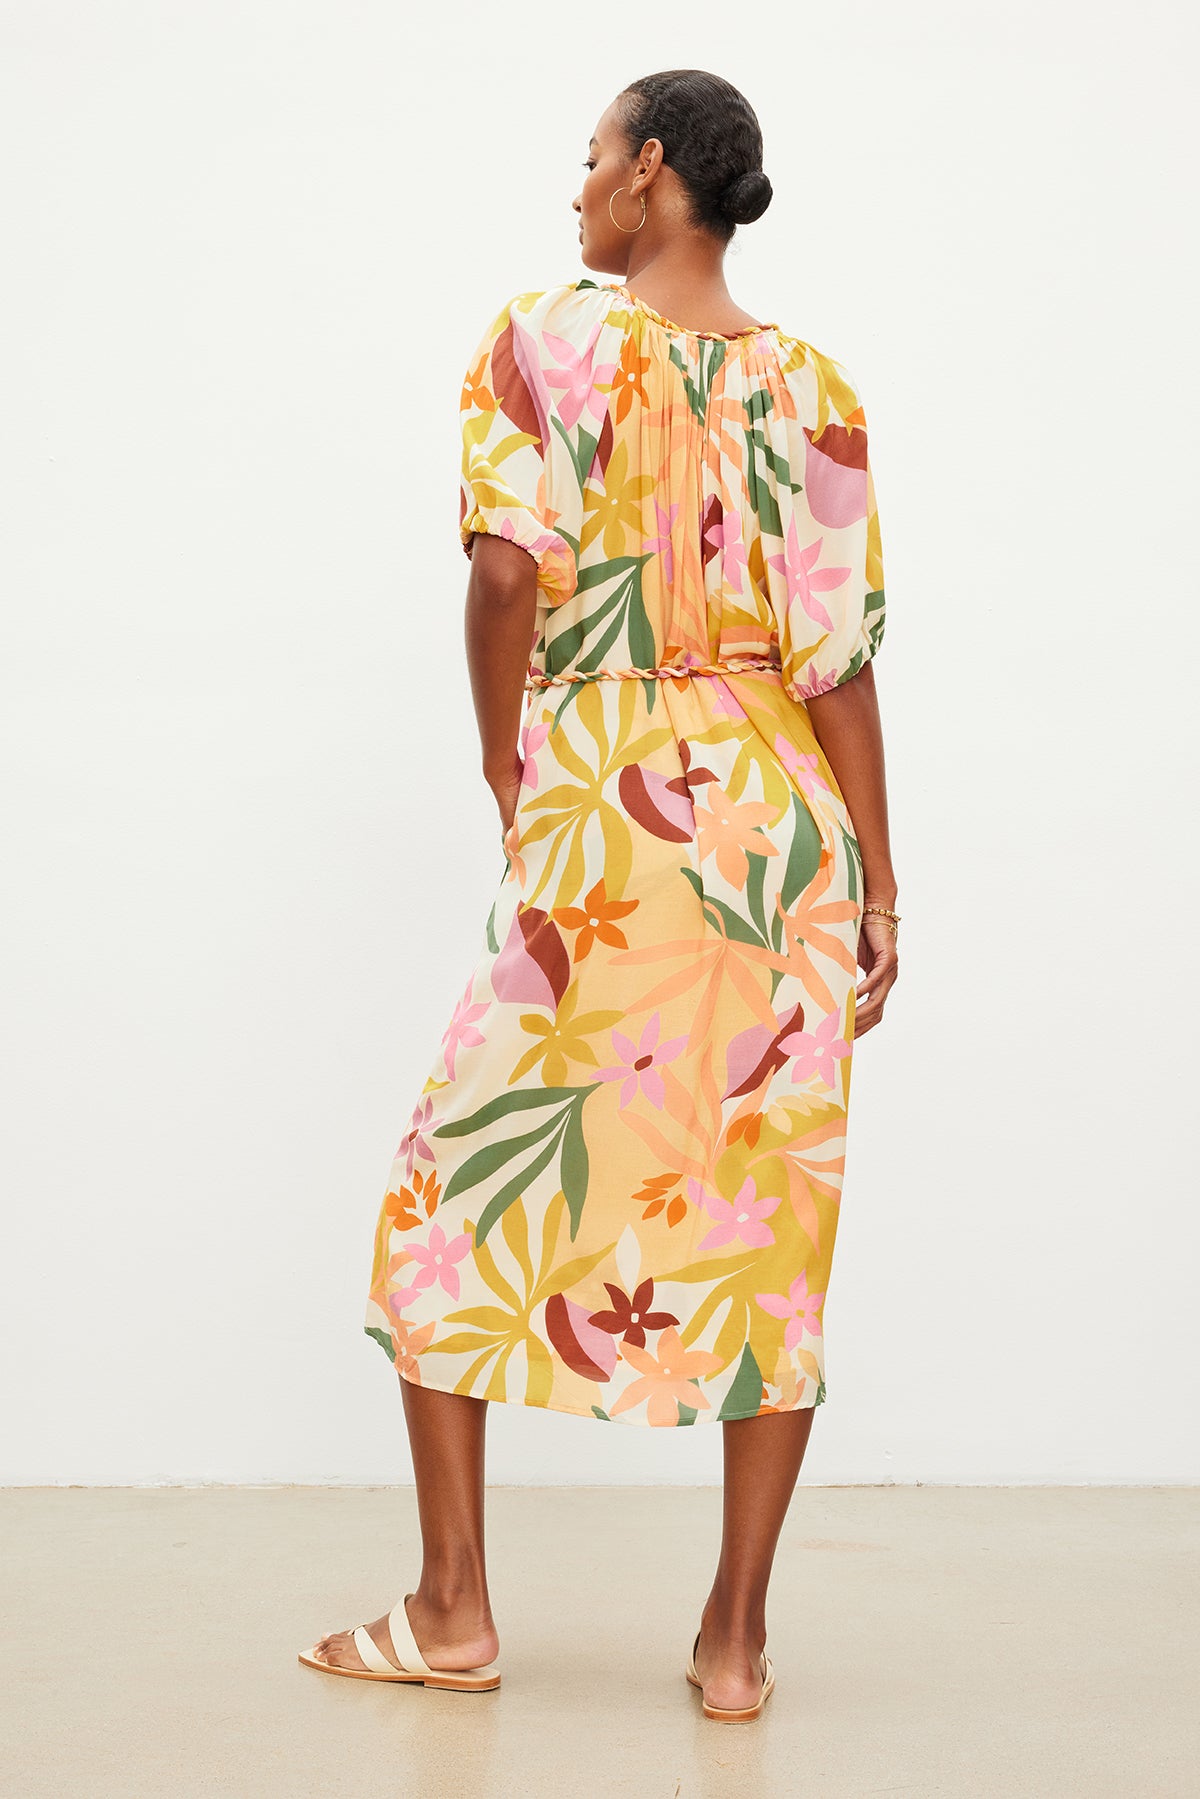 yoeyez Boho Dress for Women Casual Puff 3/4 Sleeve Vintage Summer Sundress  Flower Print V Neck Bohemian Mini Dresses 